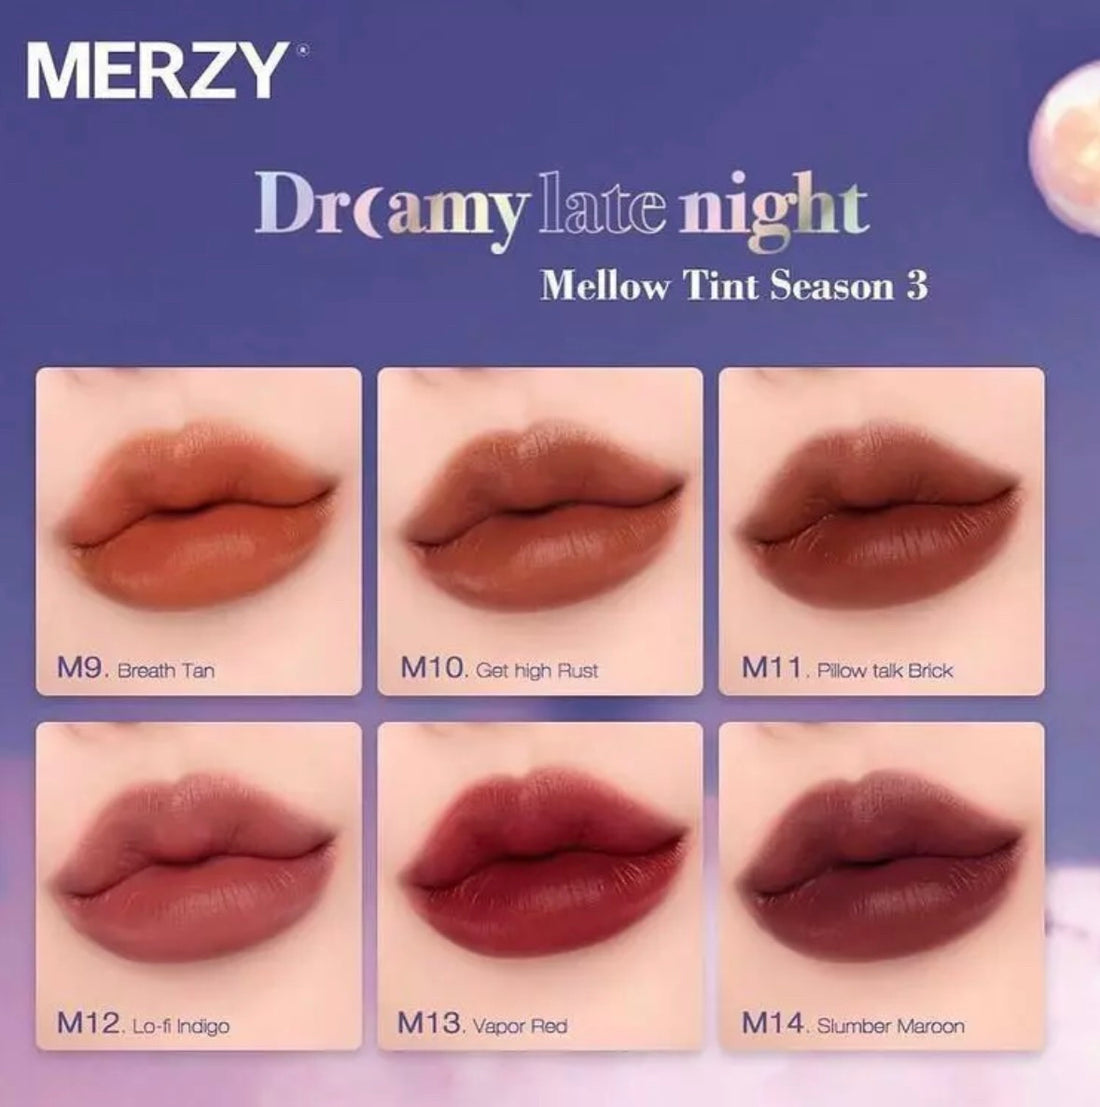 Merzy Dreamy Late Night Mellow Tint Season 3